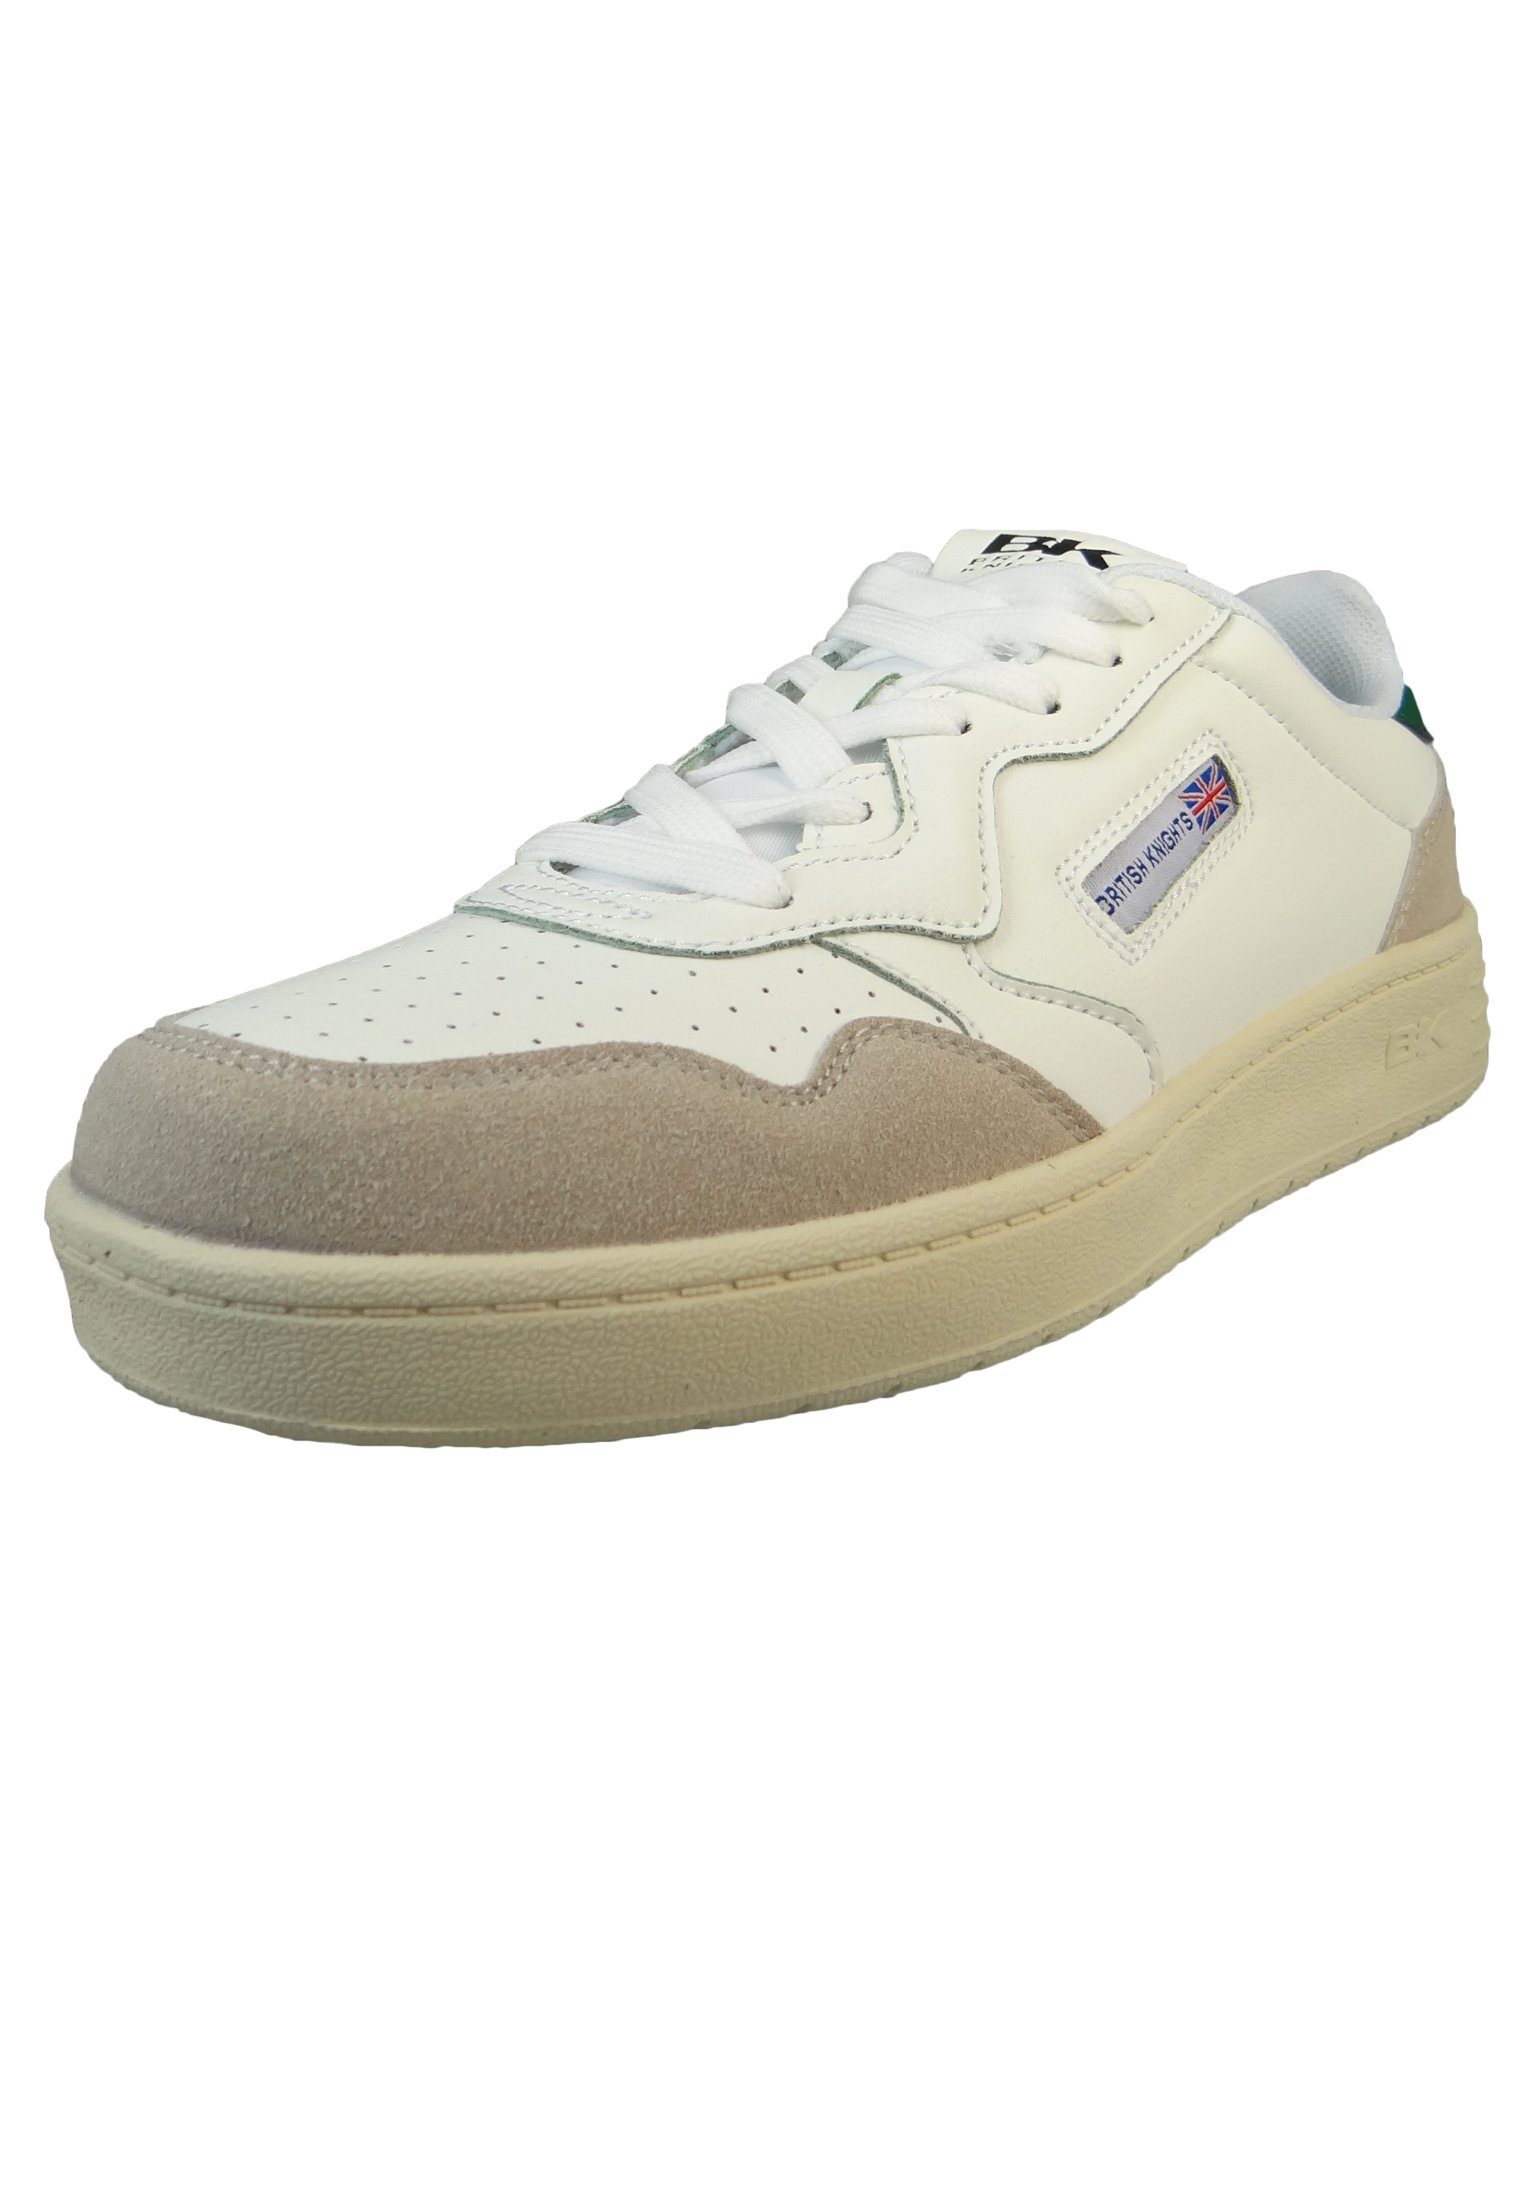 British White/Green GREEN B51-3618 (02001030) Sneaker WHITE/ Knights 04